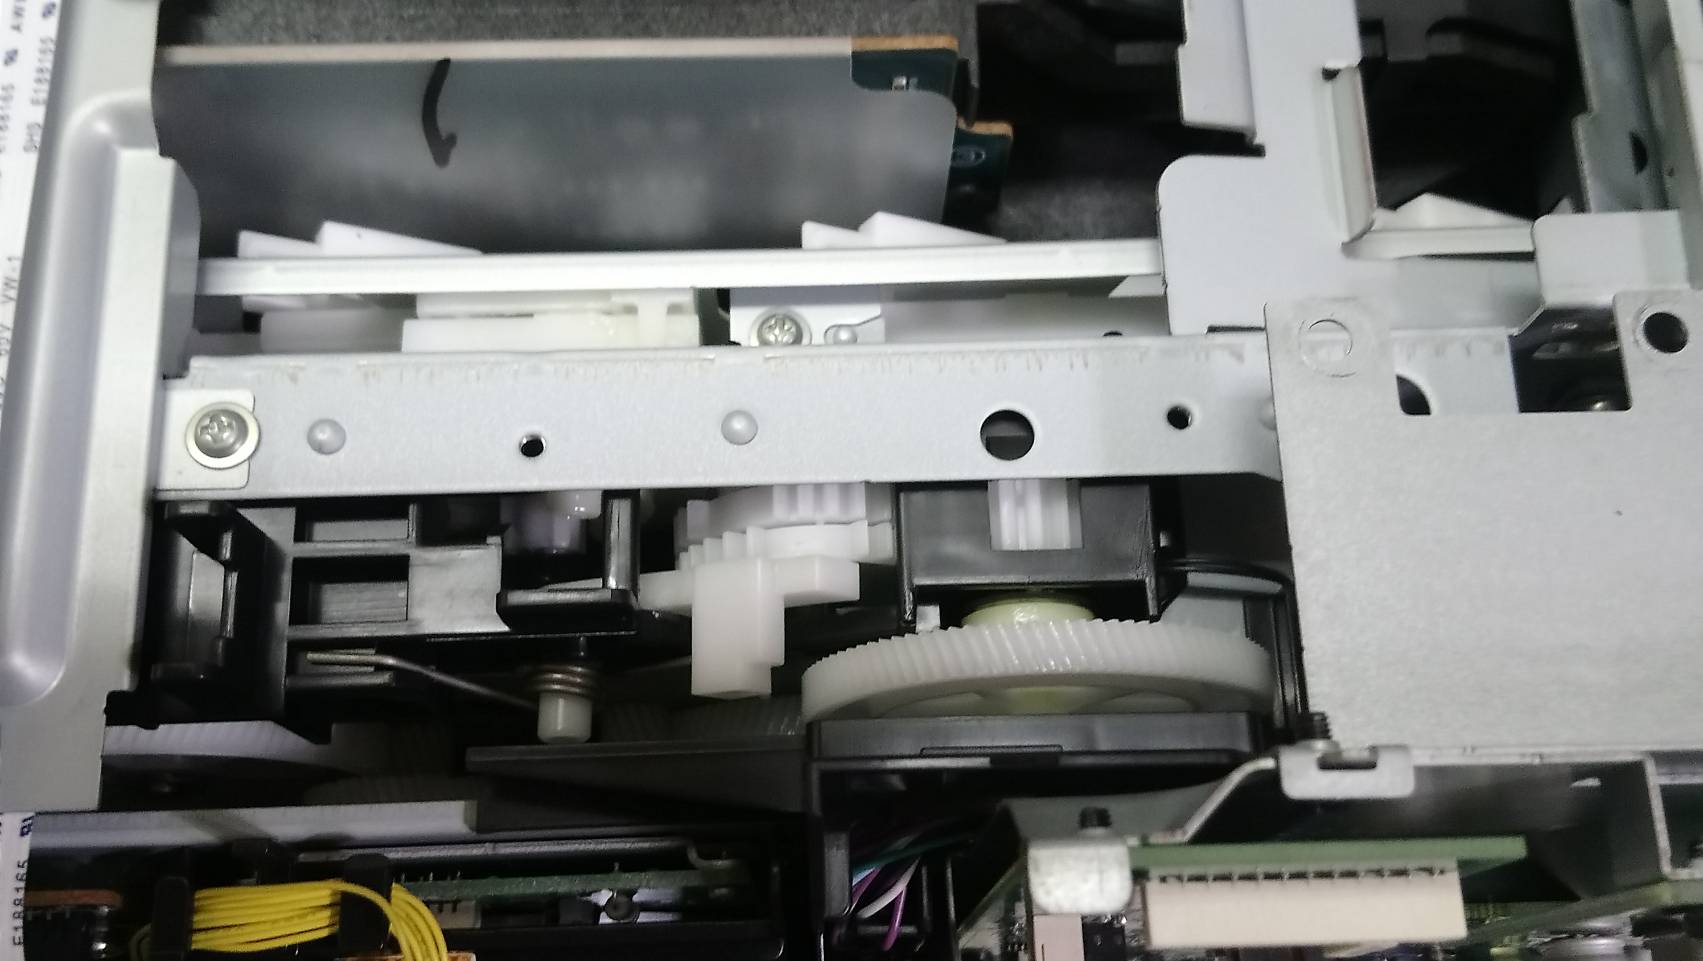 How to Fix 59.F0 Error on HP Printer